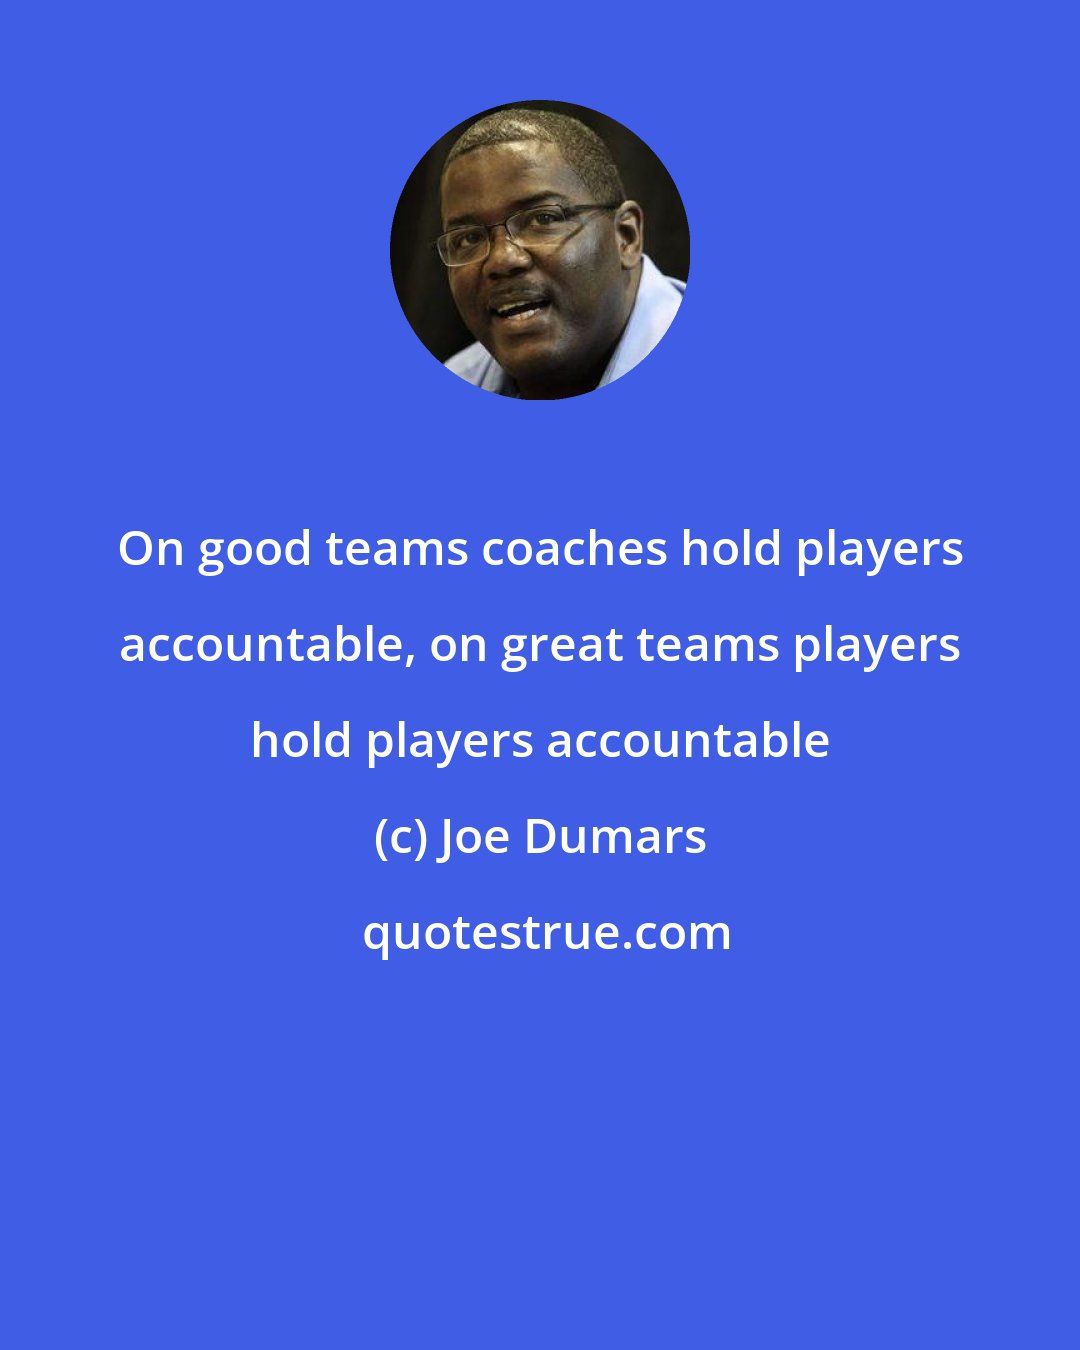 Joe Dumars: On good teams coaches hold players accountable, on great teams players hold players accountable